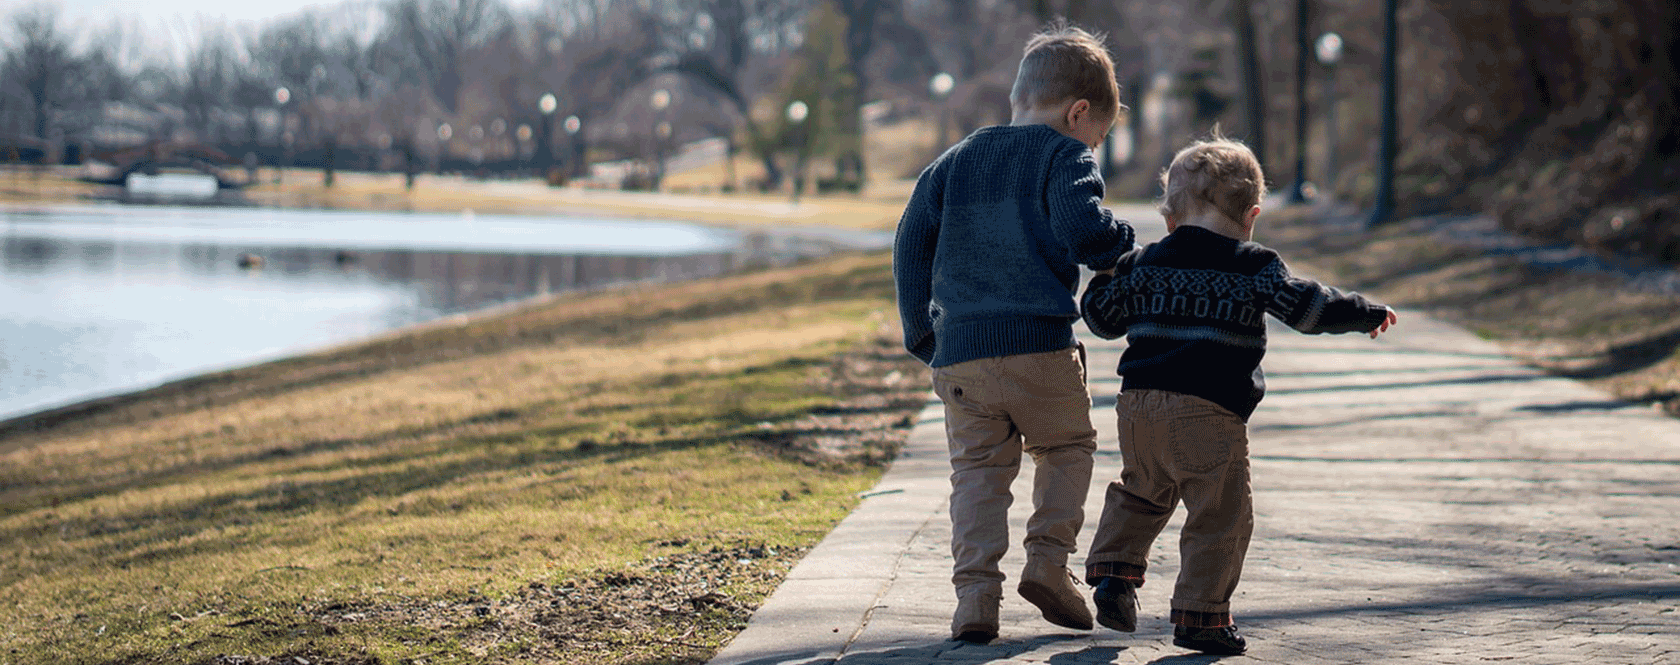 Two boys walking in a park